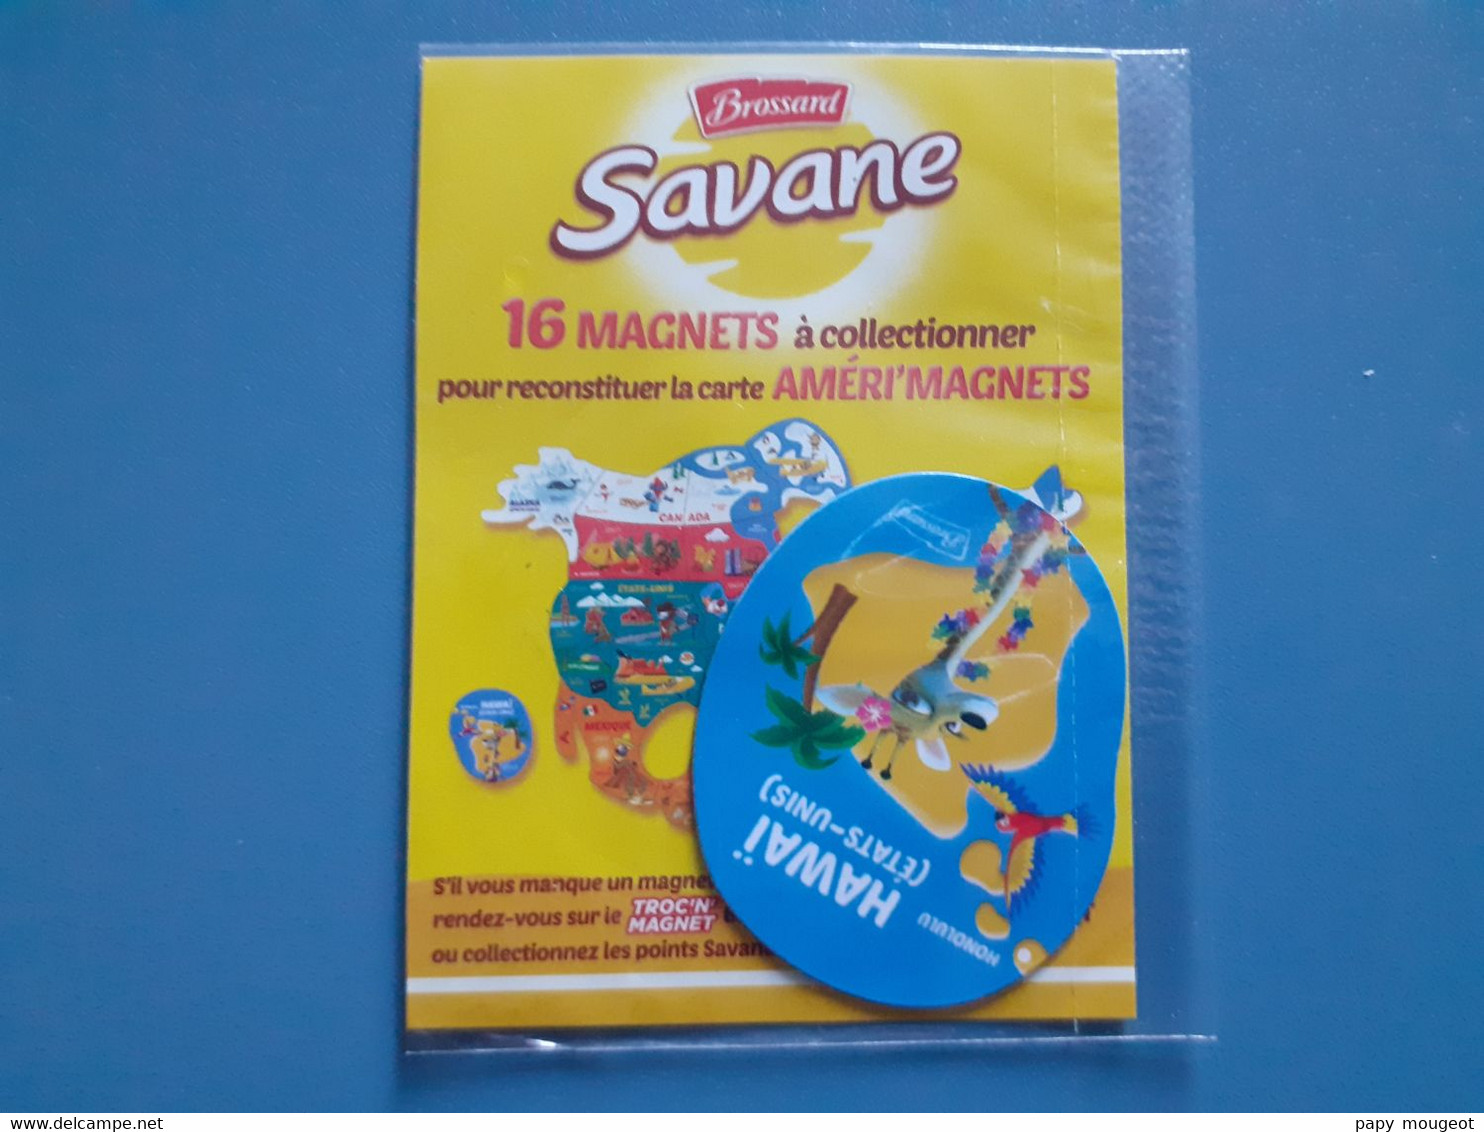 Brossard Savane - 16 Magnets Carte AMERI'MAGNETS - Hawaï (1) - Reklame